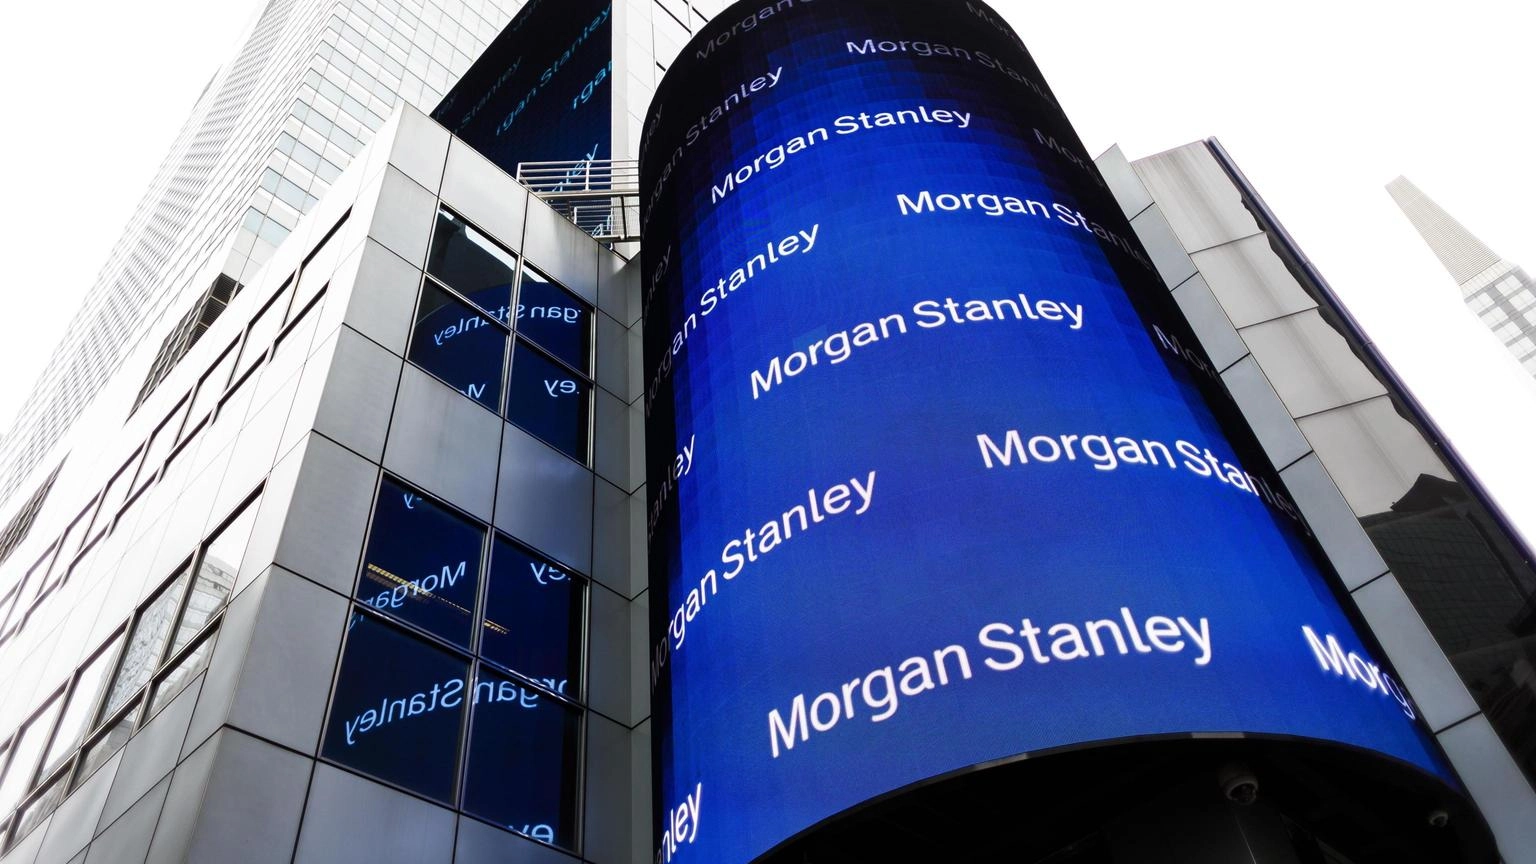 Balzo dell'utile per Morgan Stanley, sale del 41%